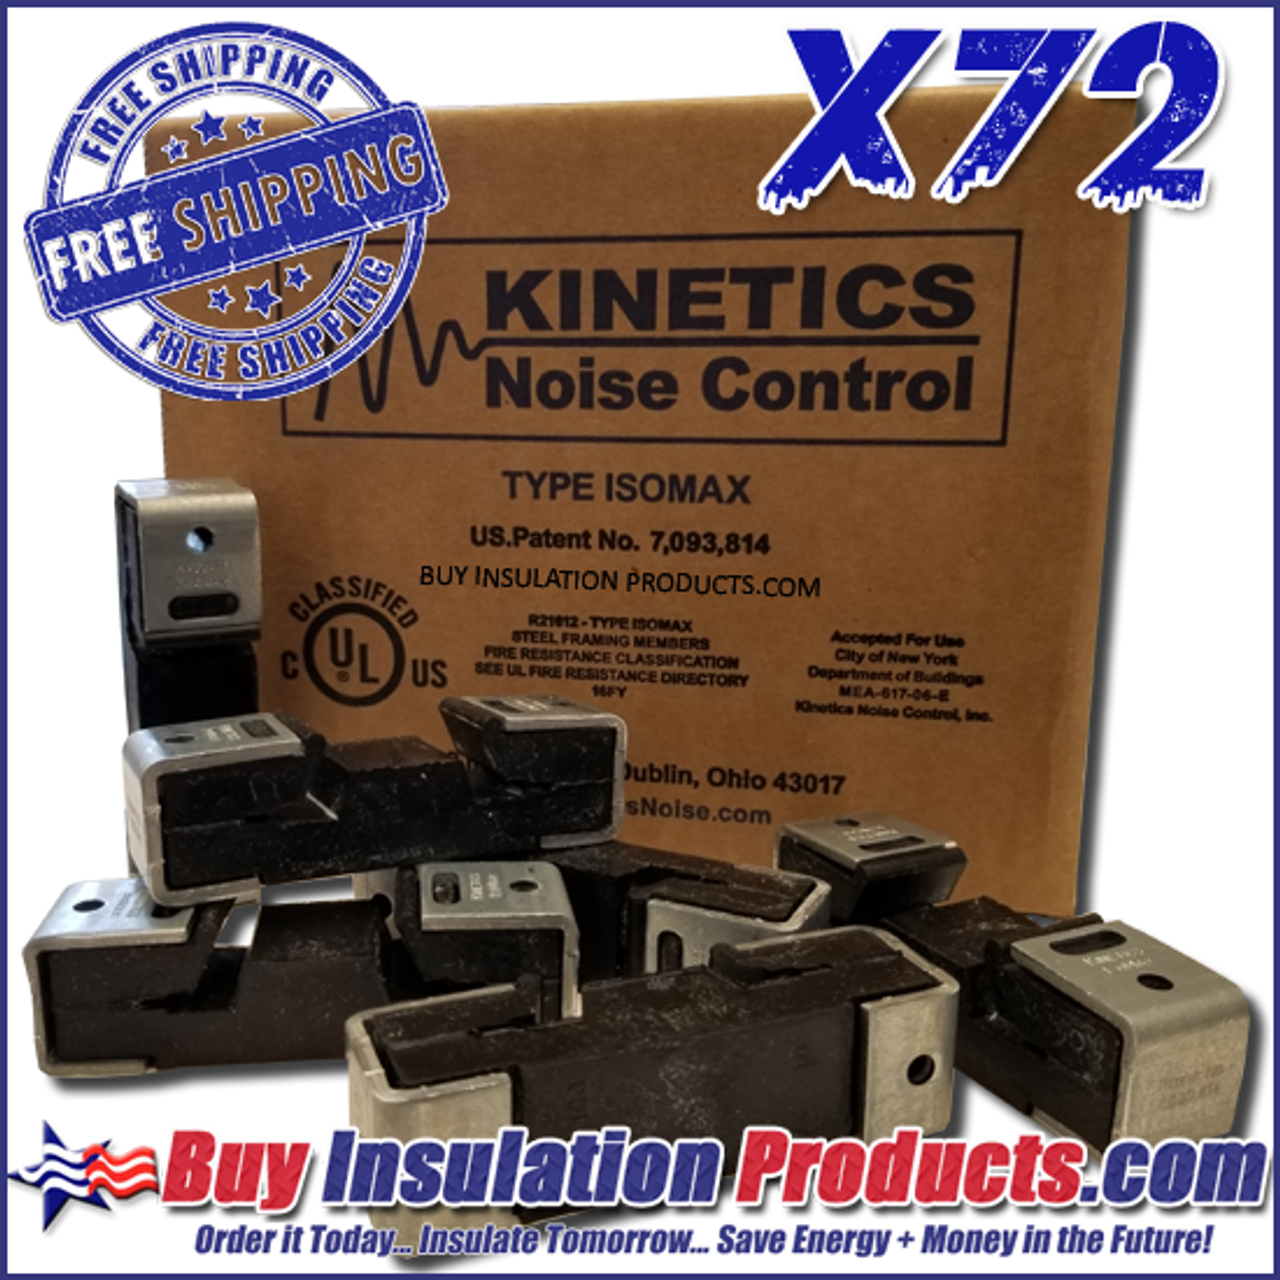 Neoprene Soundproofing Isolation Gasket Tape - 1/2 x 3-1/2 x 25